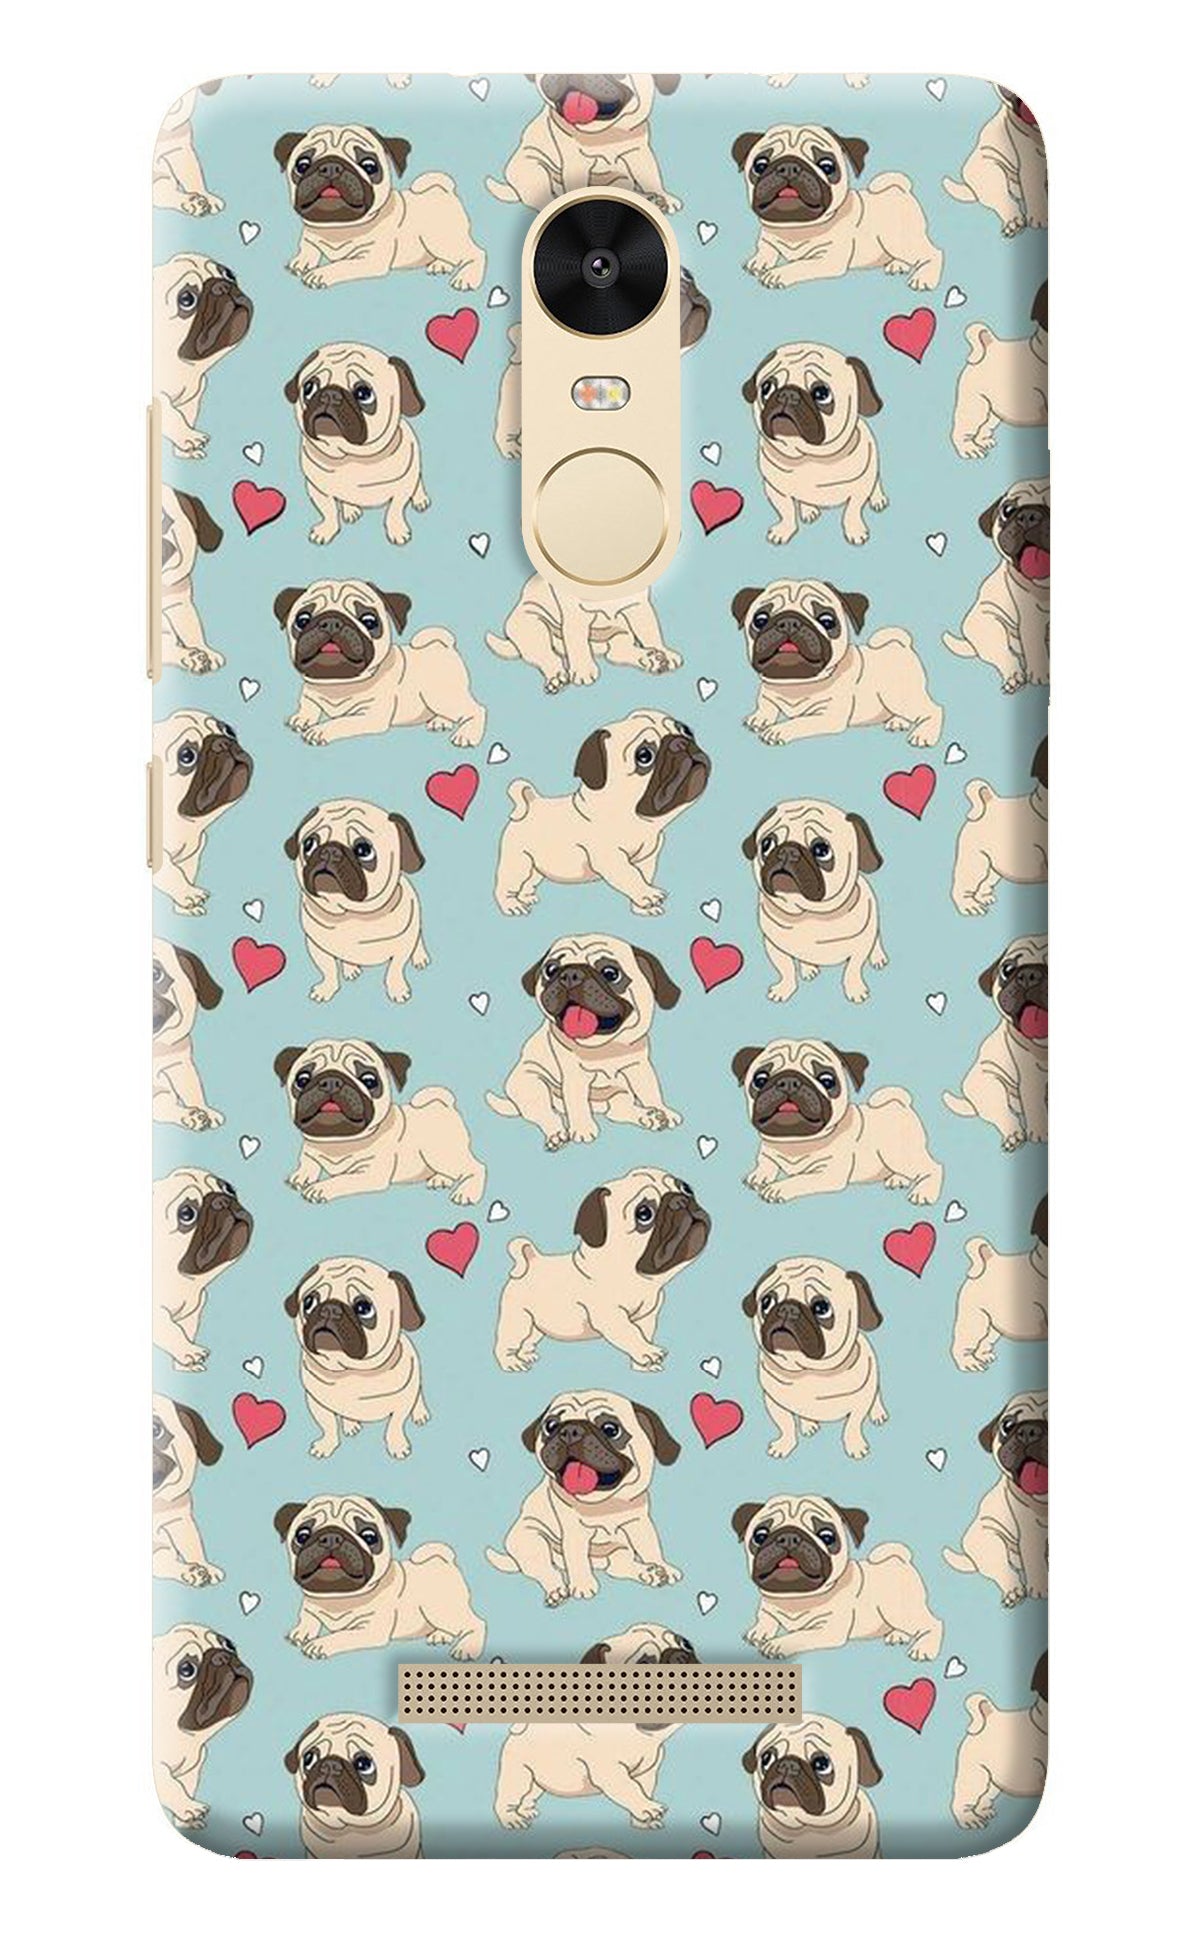 Pug Dog Redmi Note 3 Back Cover